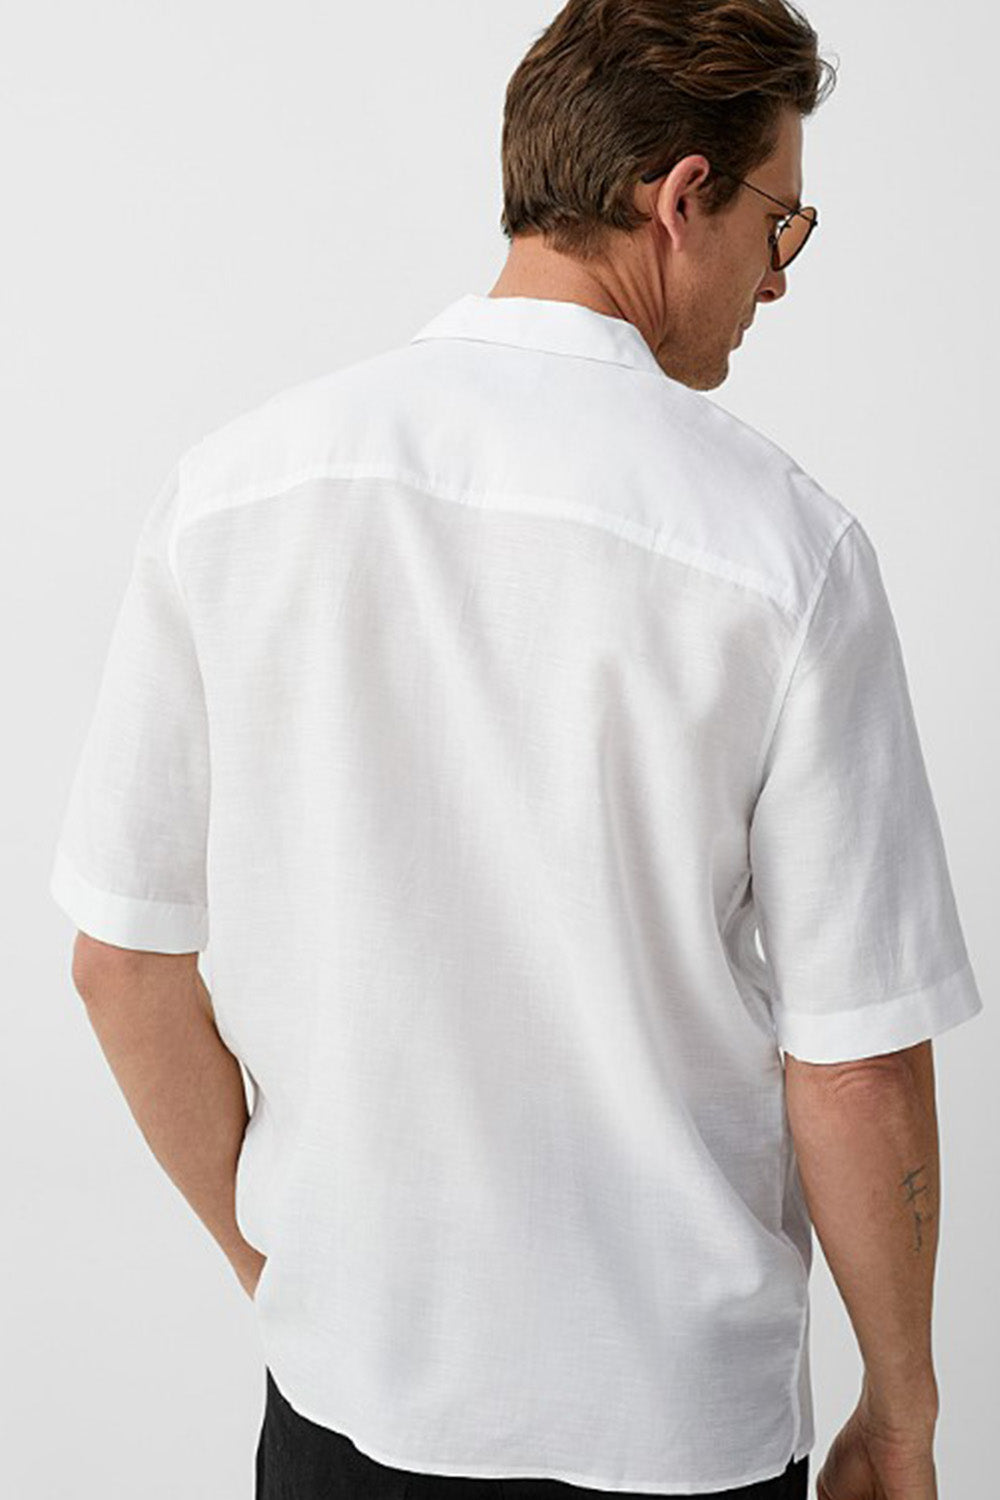 Delicate White Mens Shirt